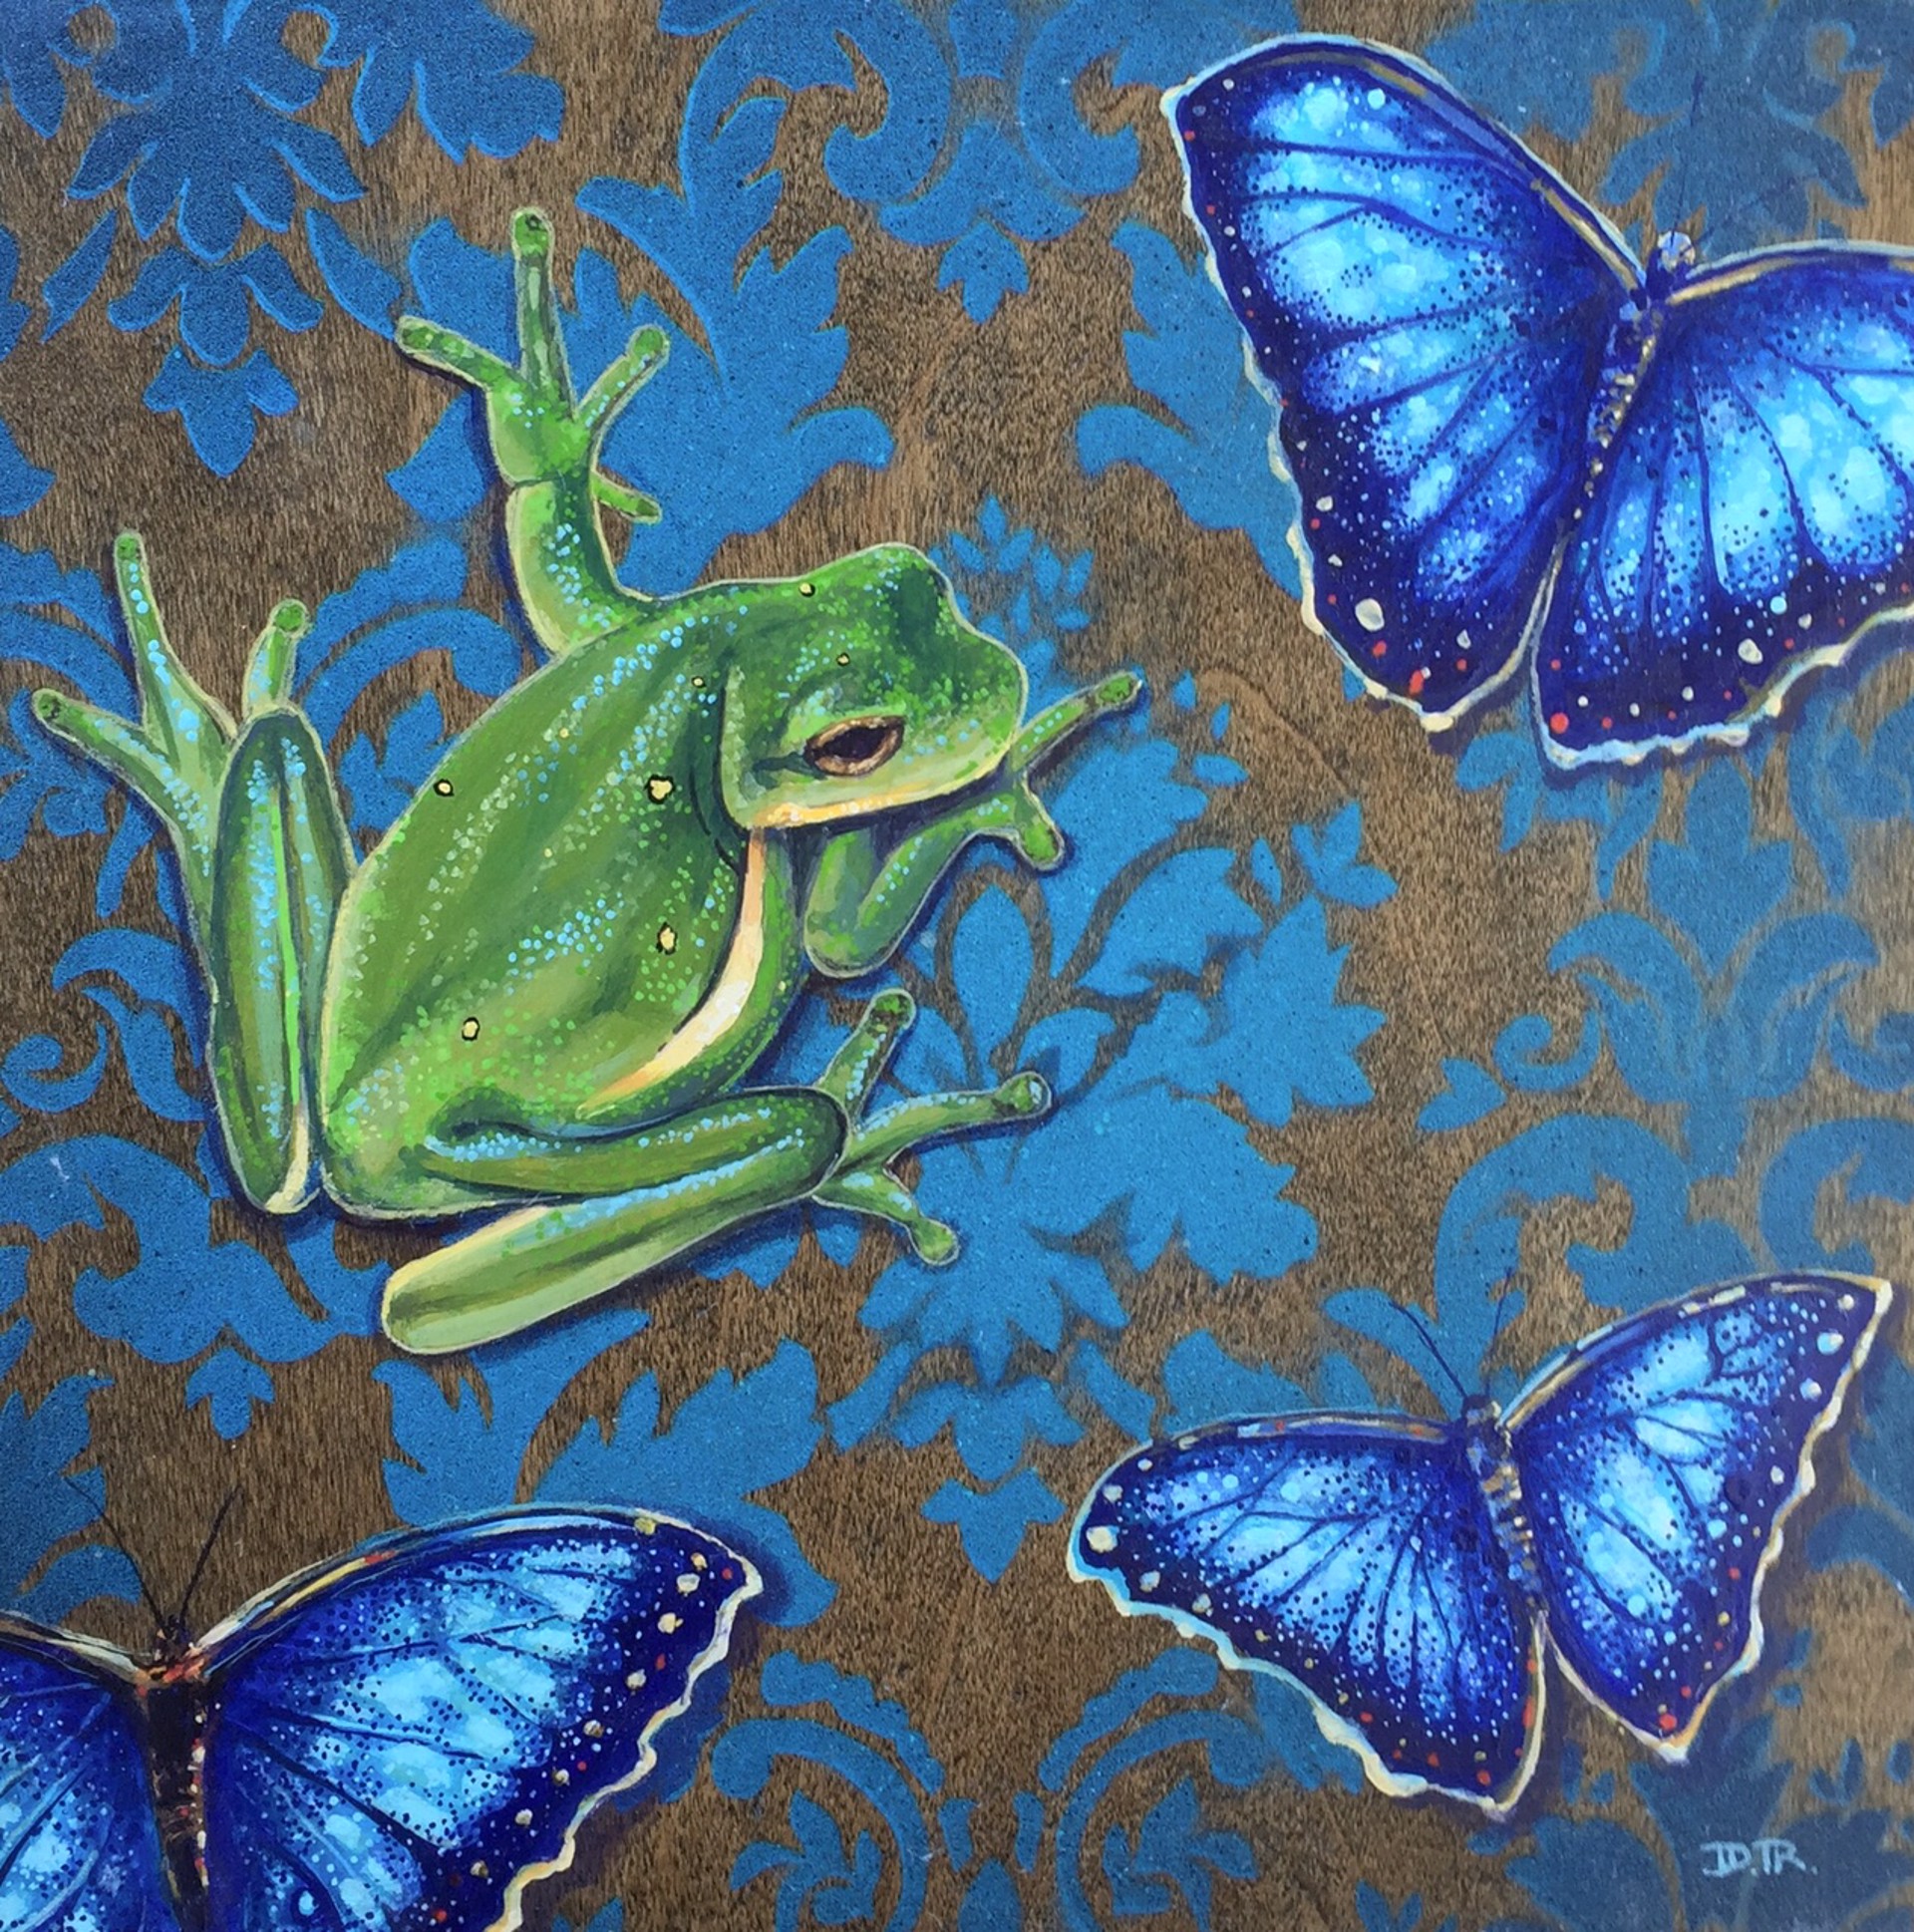 Lost in Blue Wildlife by Daniel Ryan